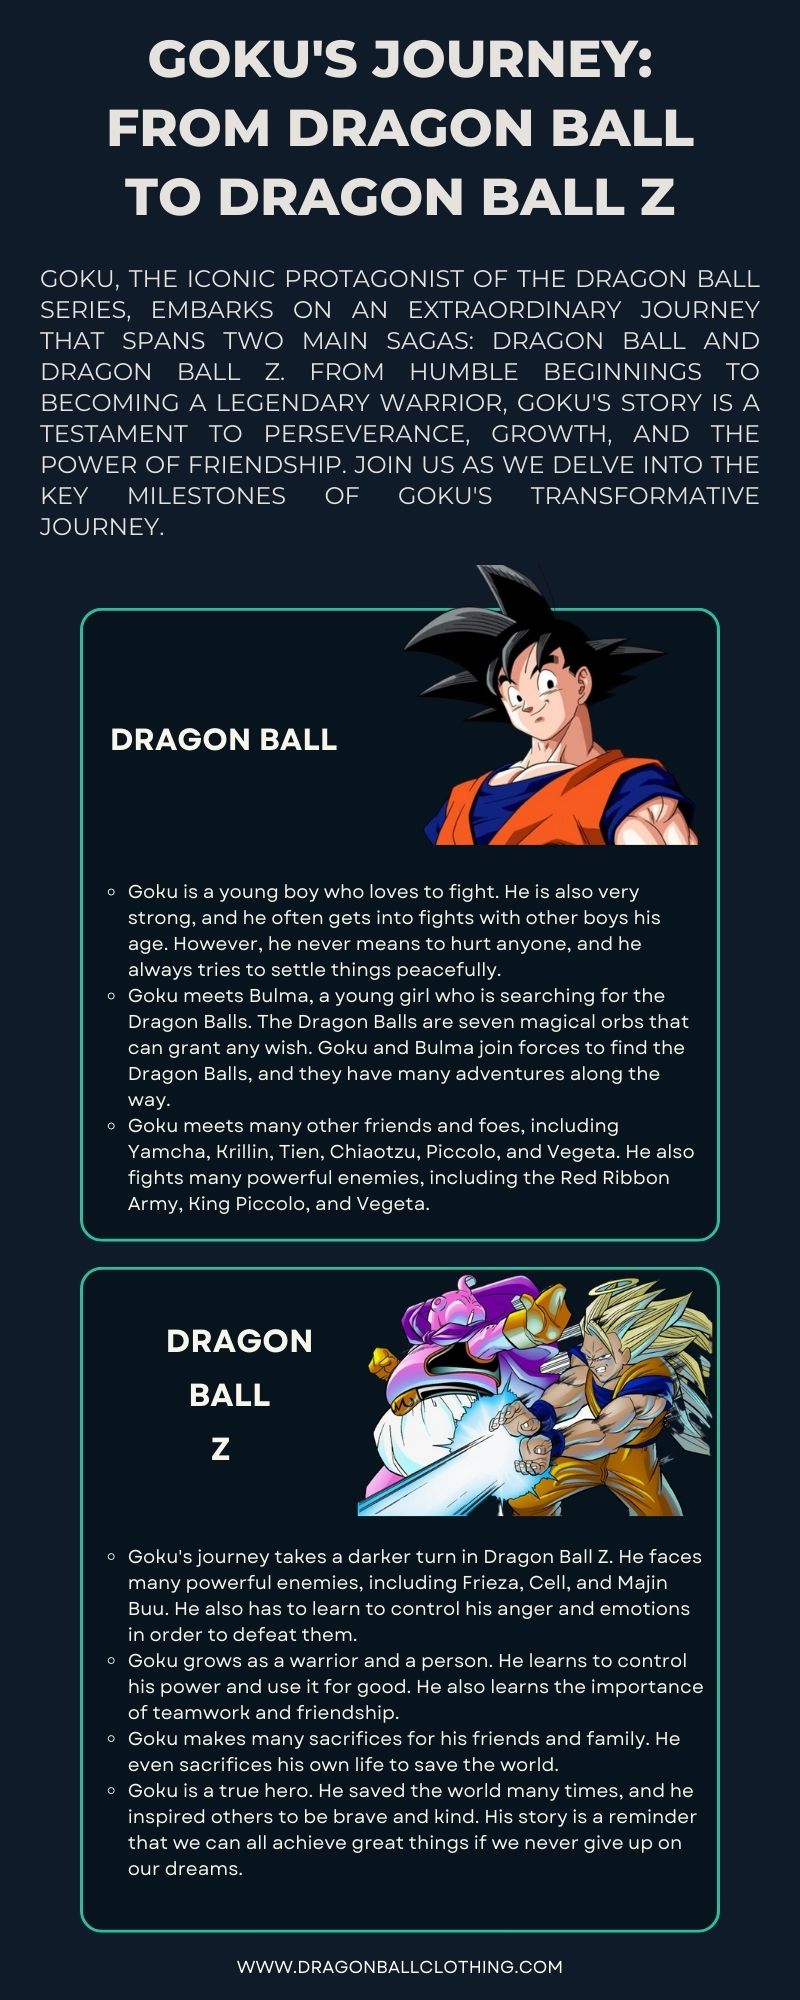 Goku's Journey From Dragon Ball to Dragon Ball Z